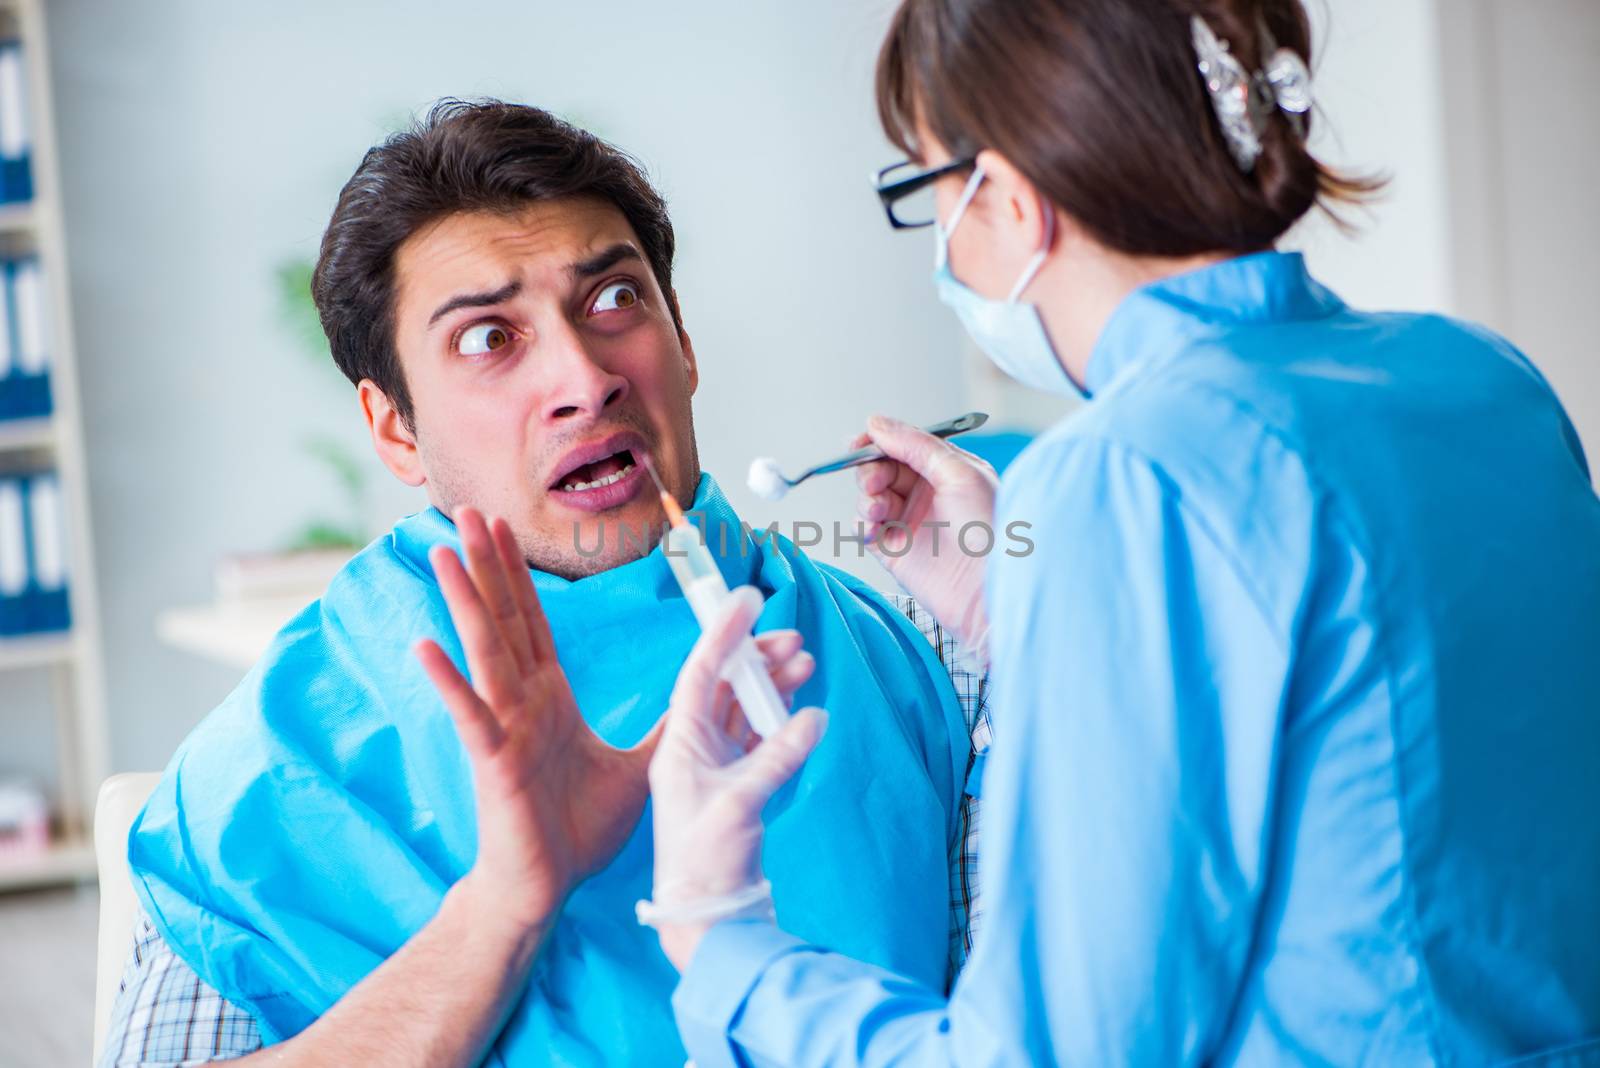 Patient afraid of dentist during doctor visit by Elnur